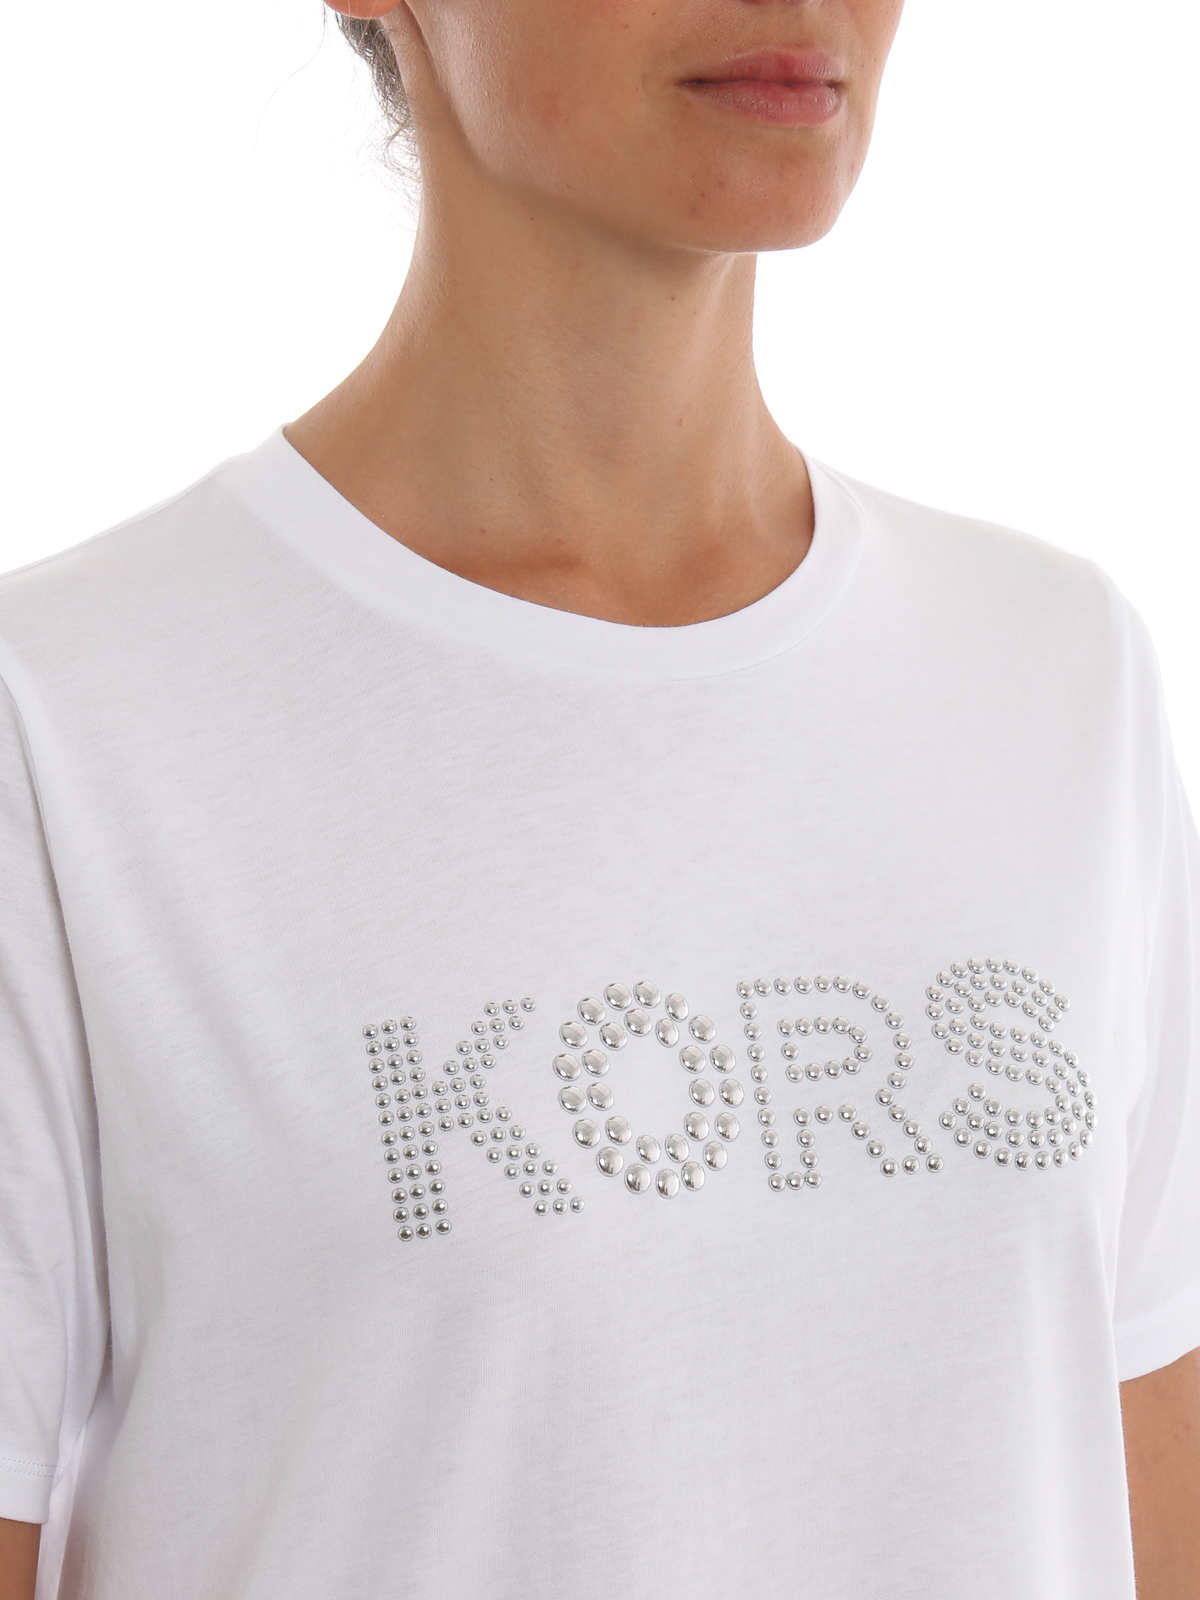 T-shirts Michael Kors - Studded logo white T-shirt - MU95M9697J100